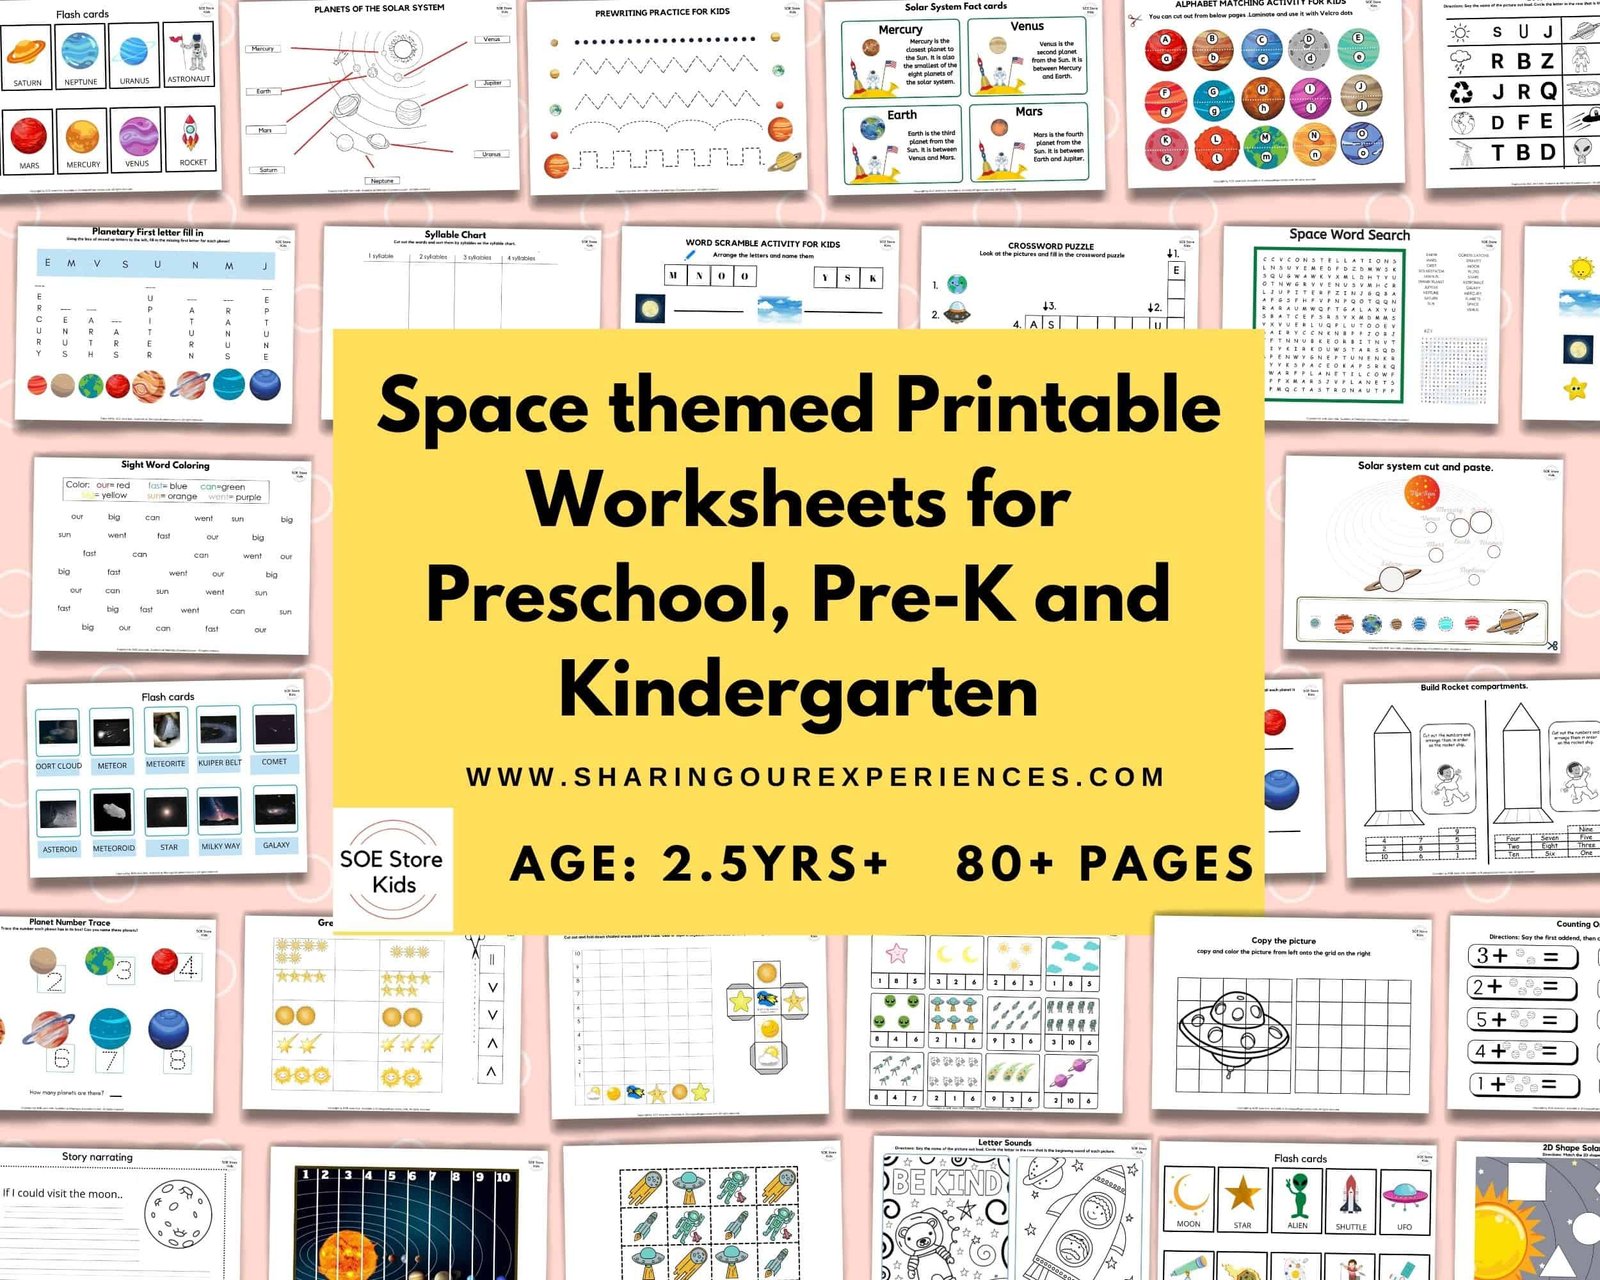 Space themed Printable Worksheets for Preschool, Pre-K and Kindergarten